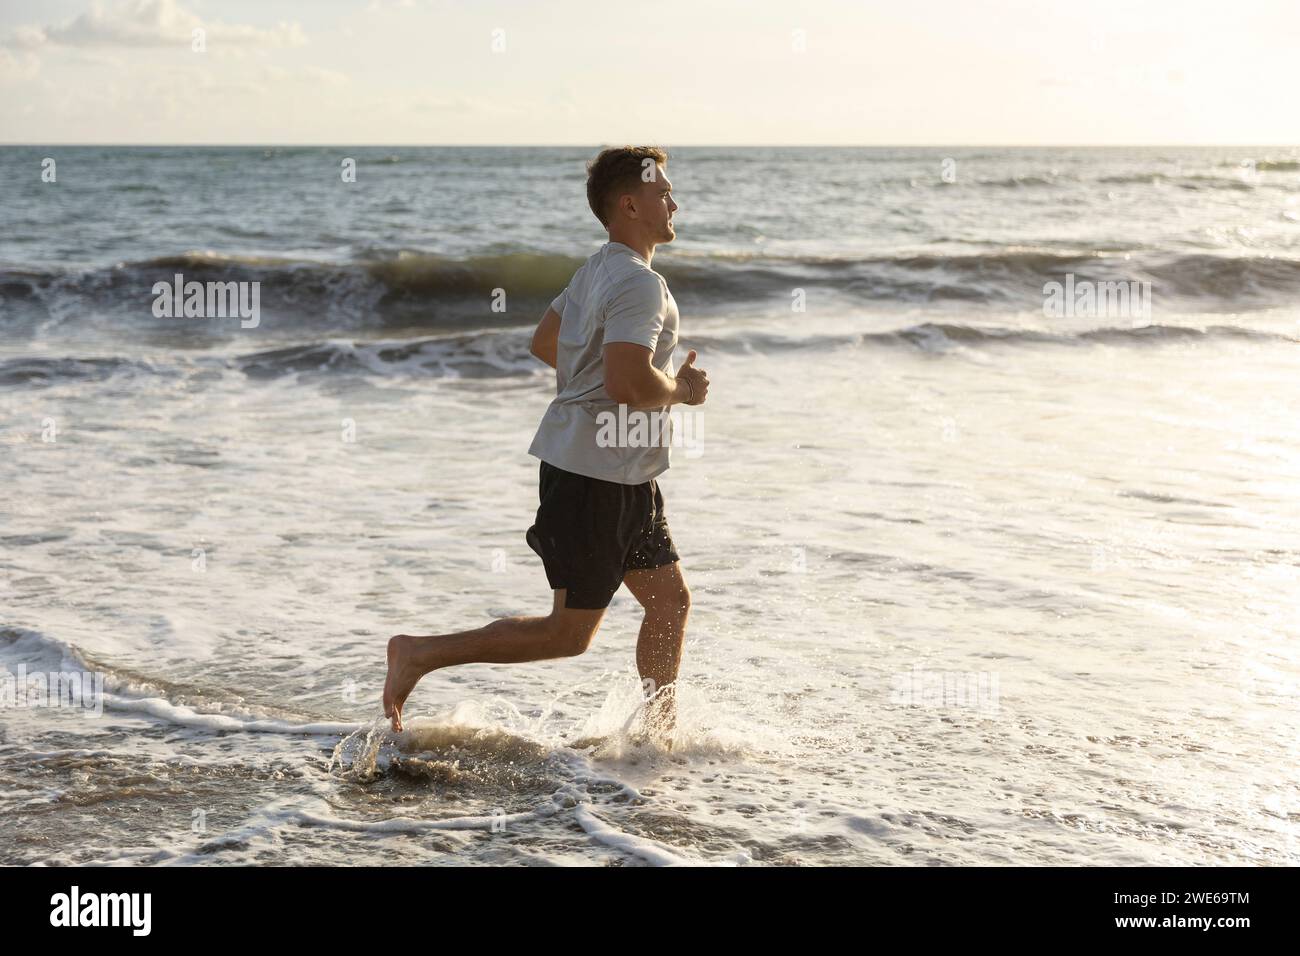 Man running in sea water at beach Stock Photo